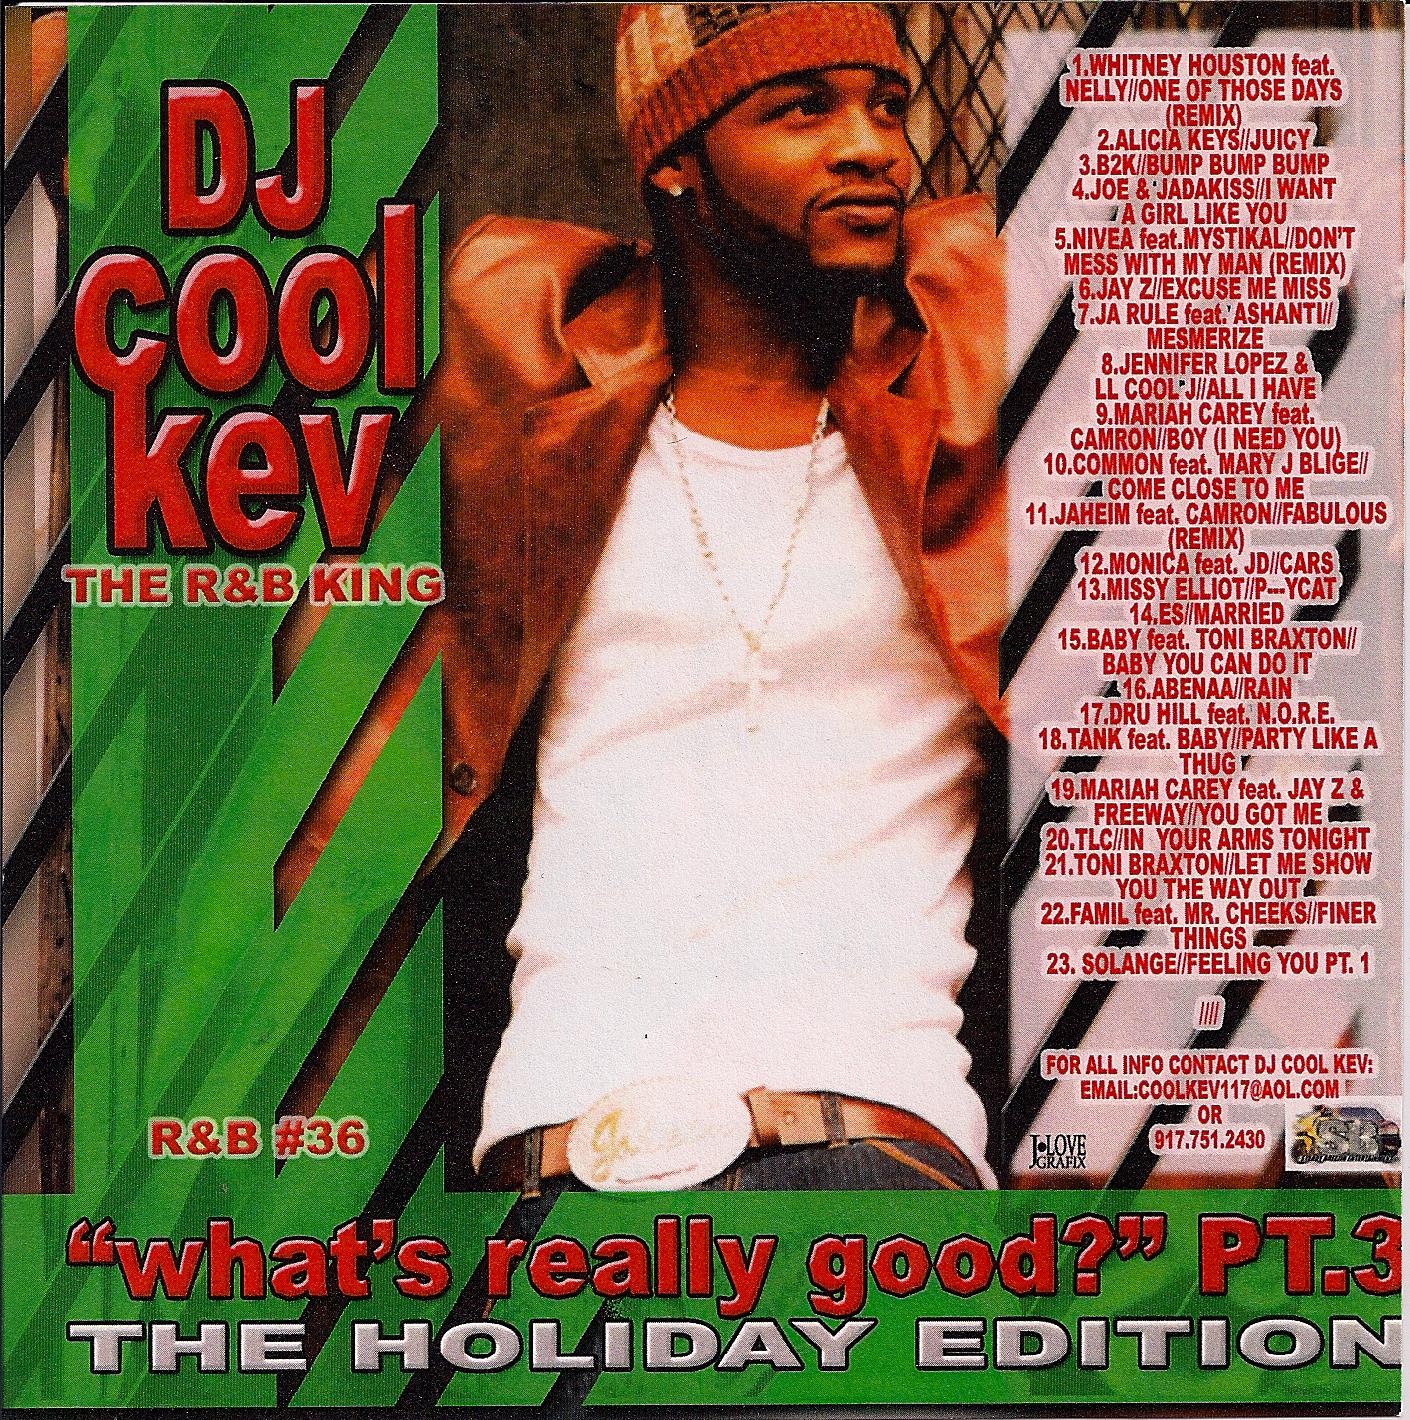 DJ Cool Kev – R&B 36, R&B, RNB, Throwback R&B, Mixtape Downloads, Downloads